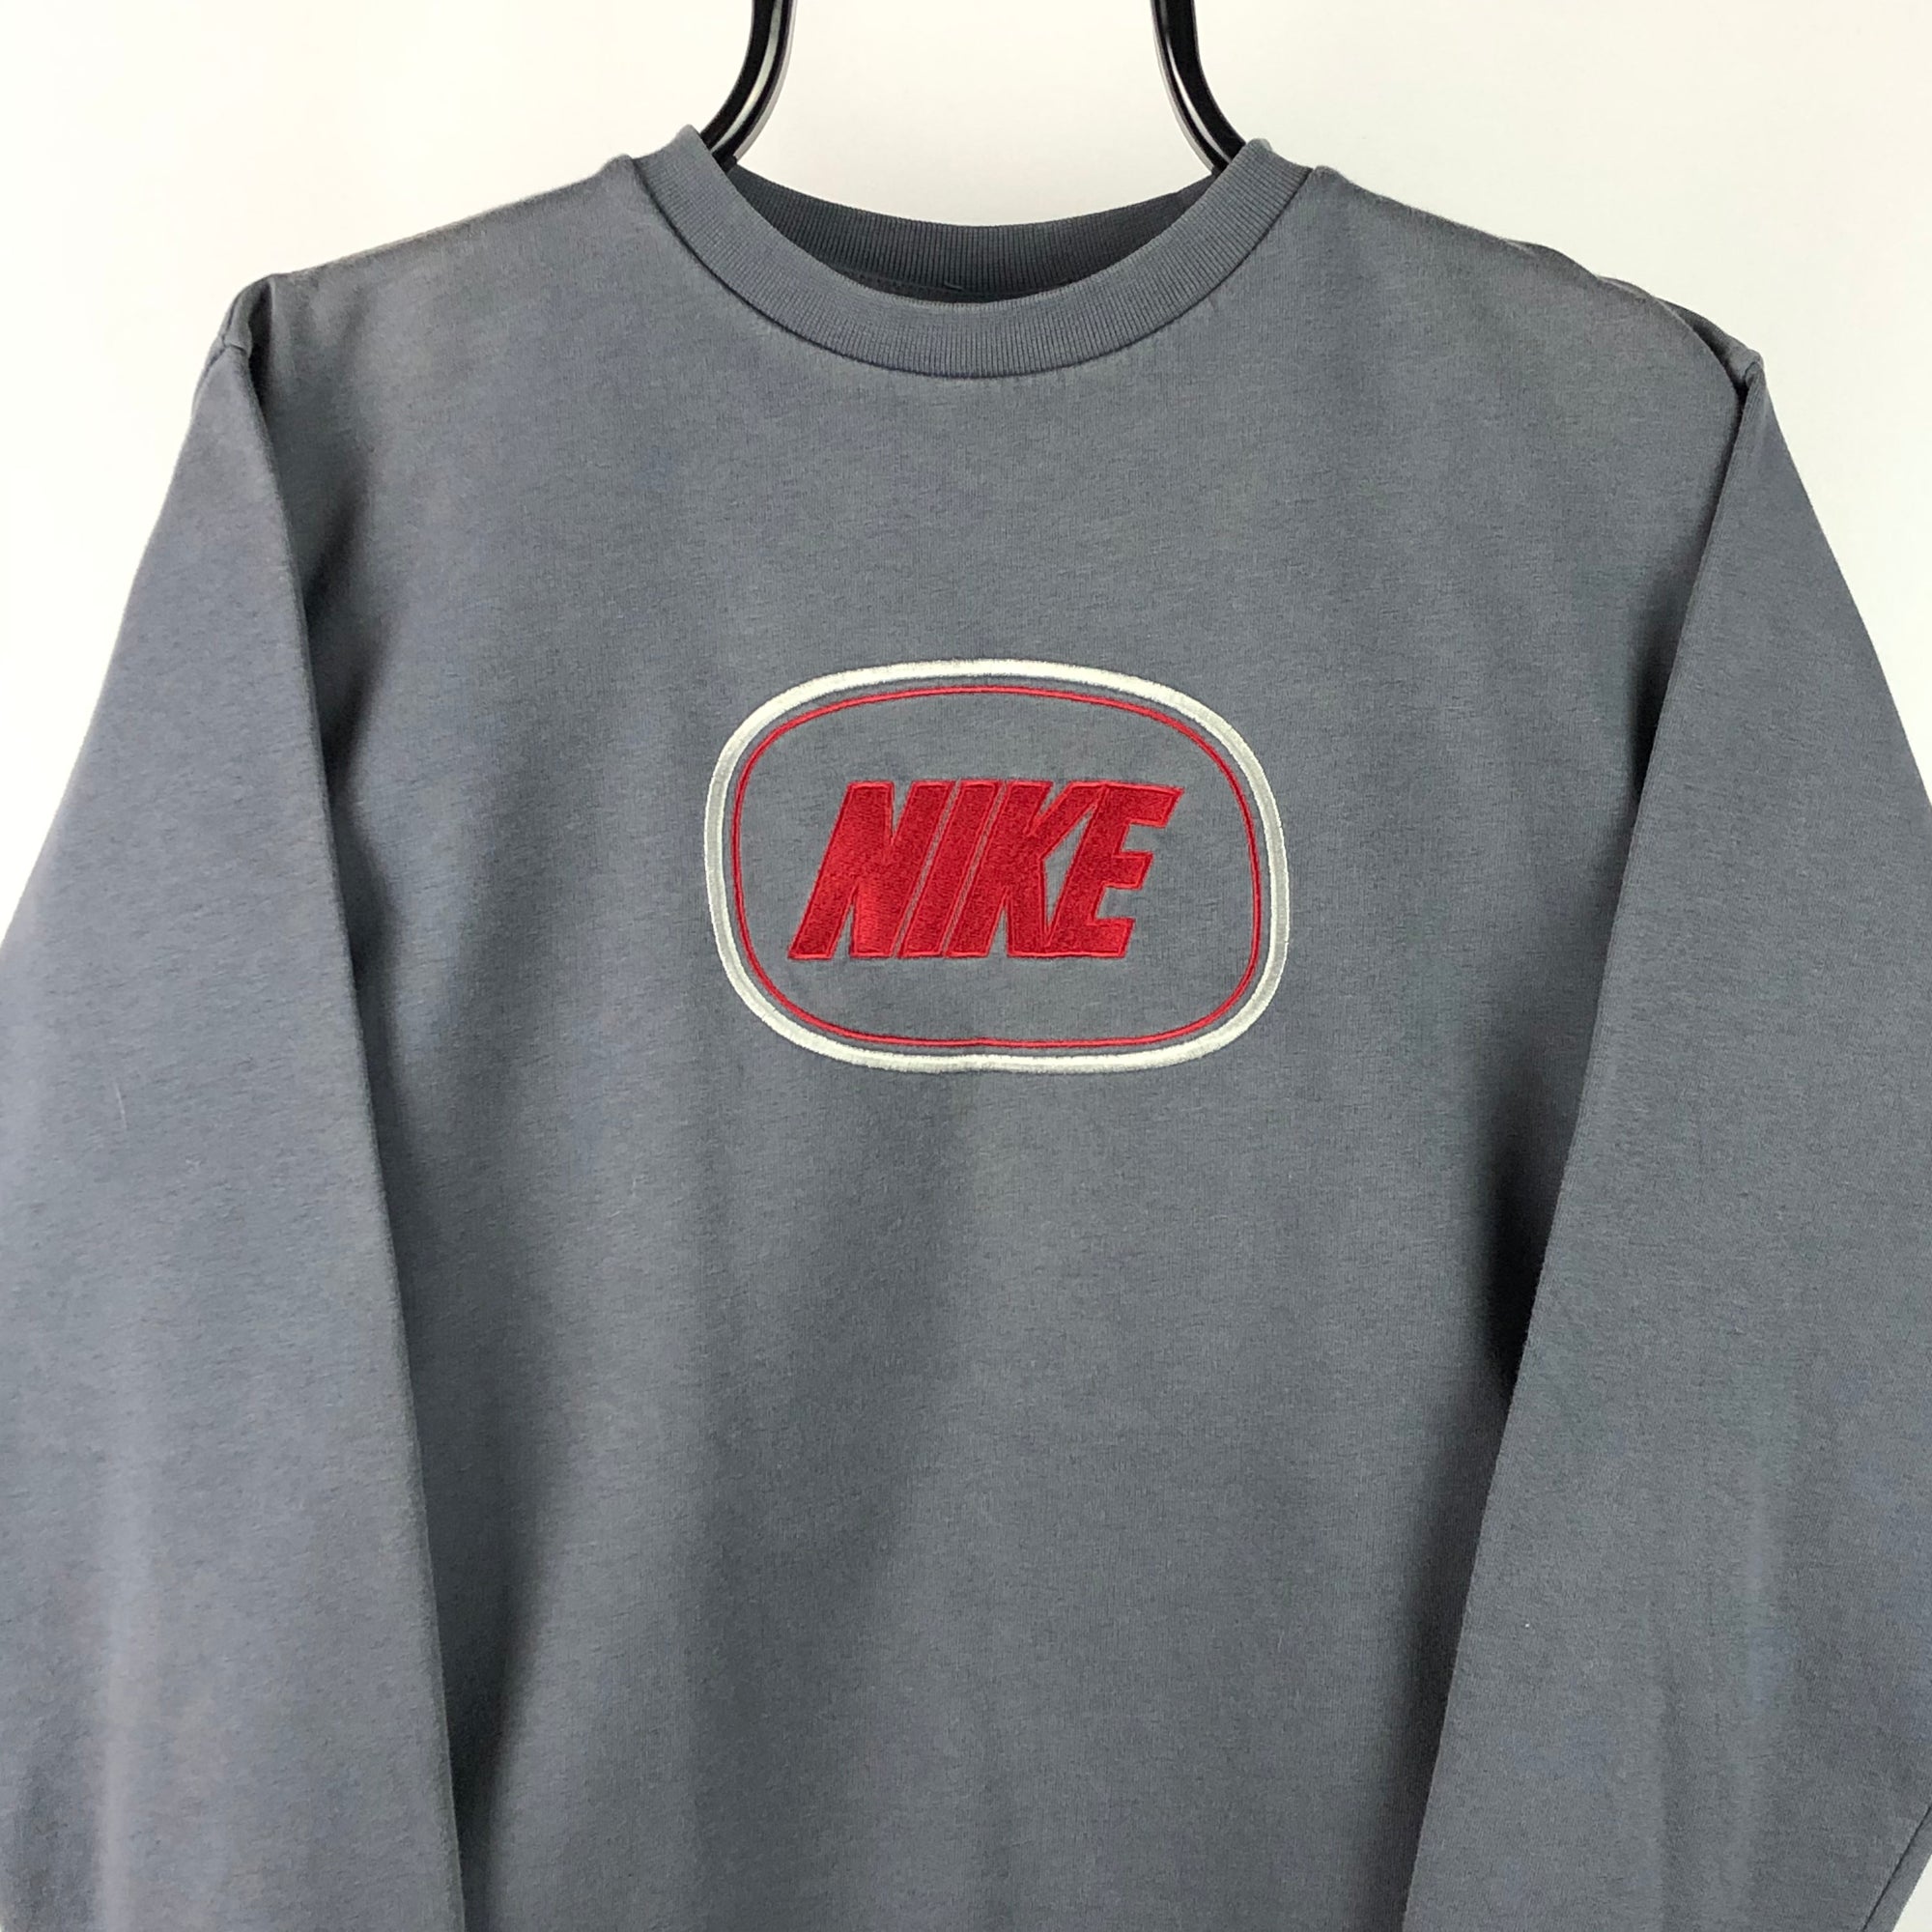 Vintage Nike Spellout Sweatshirt in Dark Stone/Red - Men's Small/Women's Medium